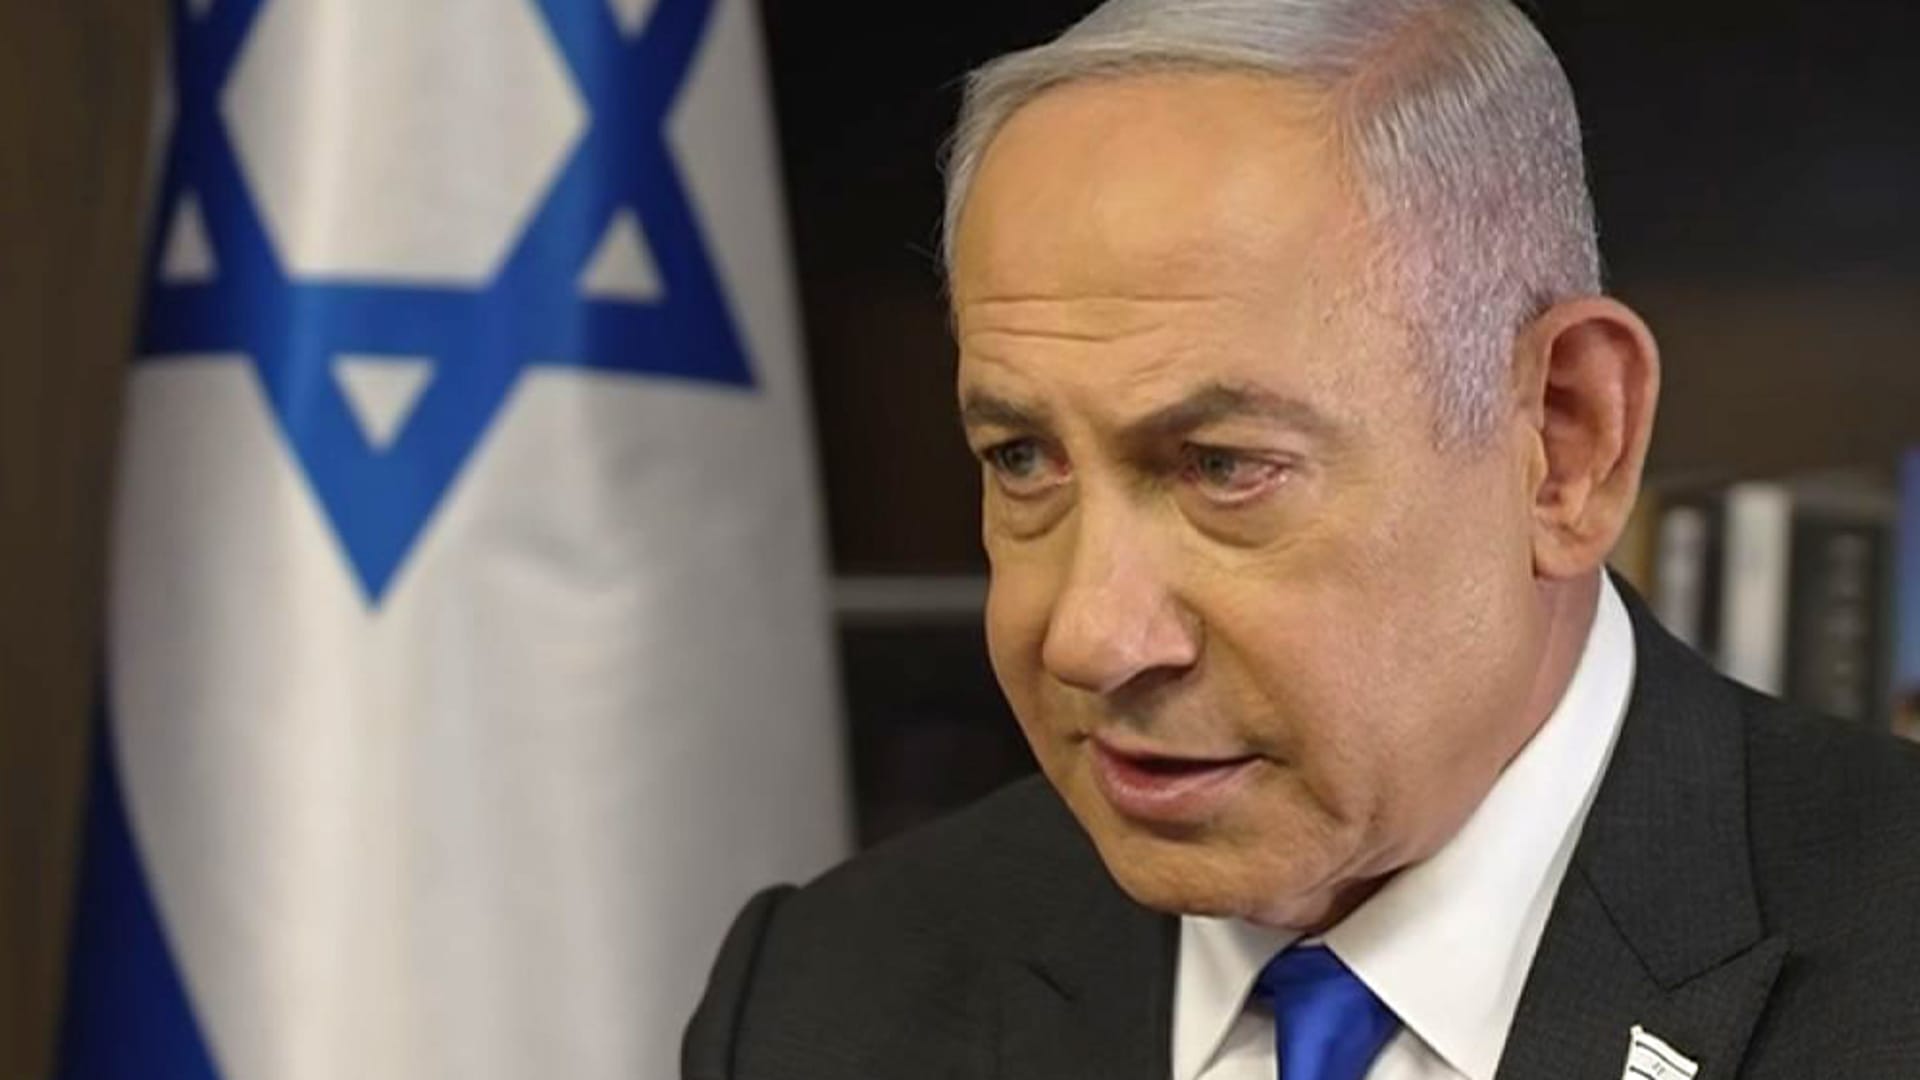 Netanyahu stands firm on Rafah offensive despite U.S. tensions [Video]